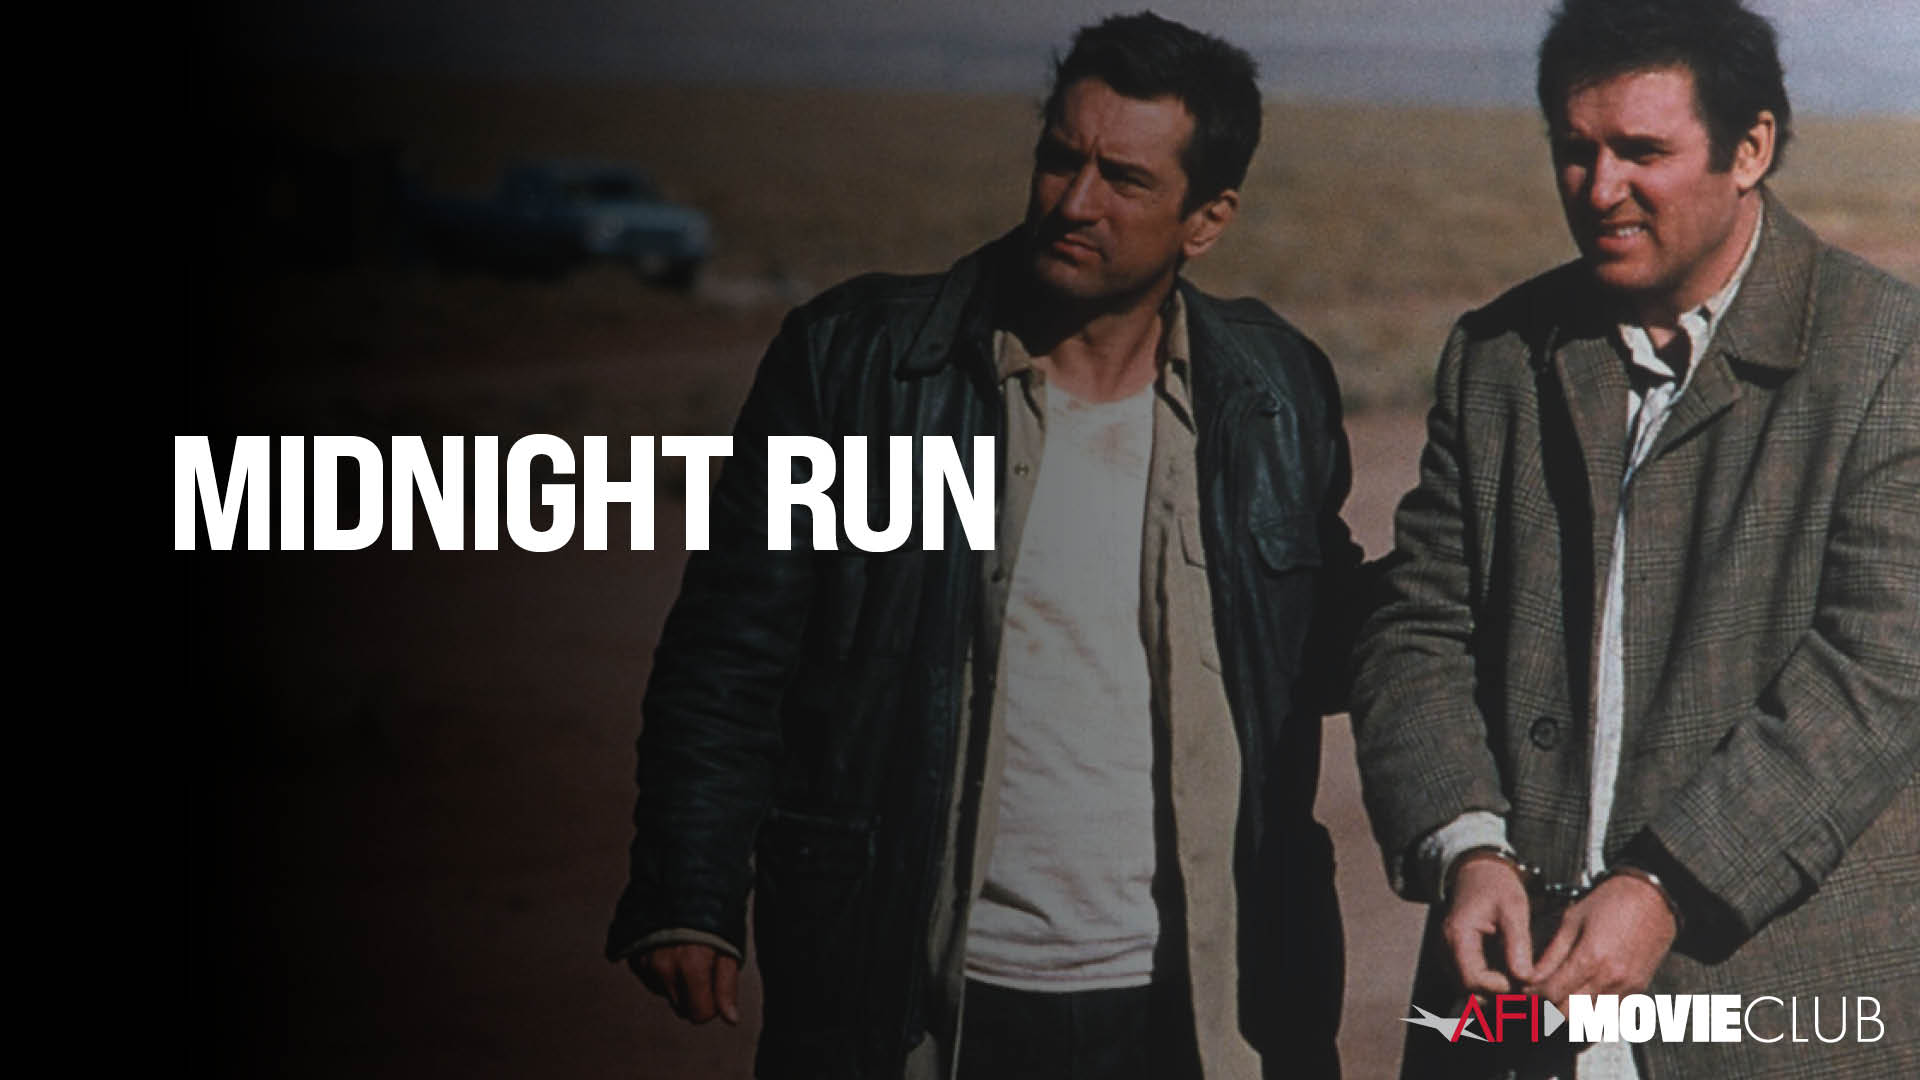 Midnight Run Film Still - Robert De Niro and Charles Grodin